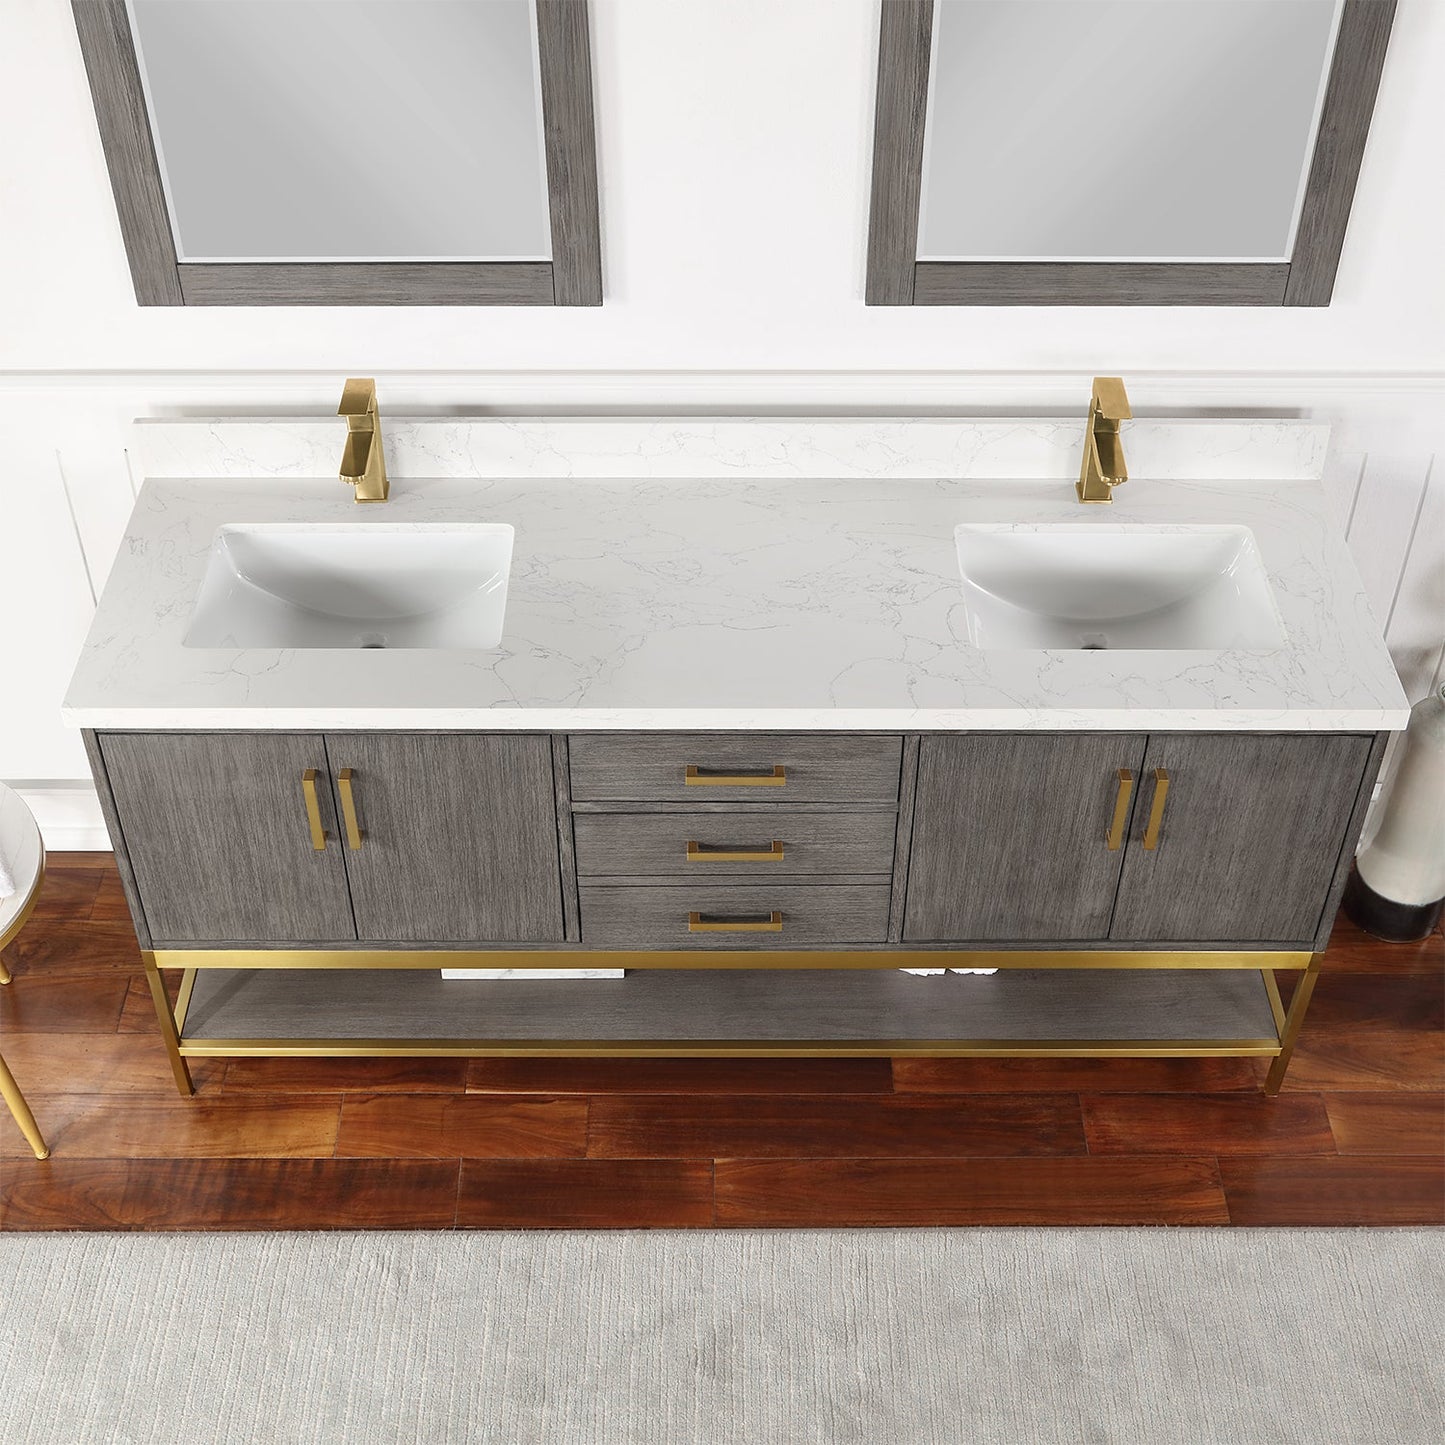 Wildy 72" Double Bathroom Vanity Set in Classical Grey